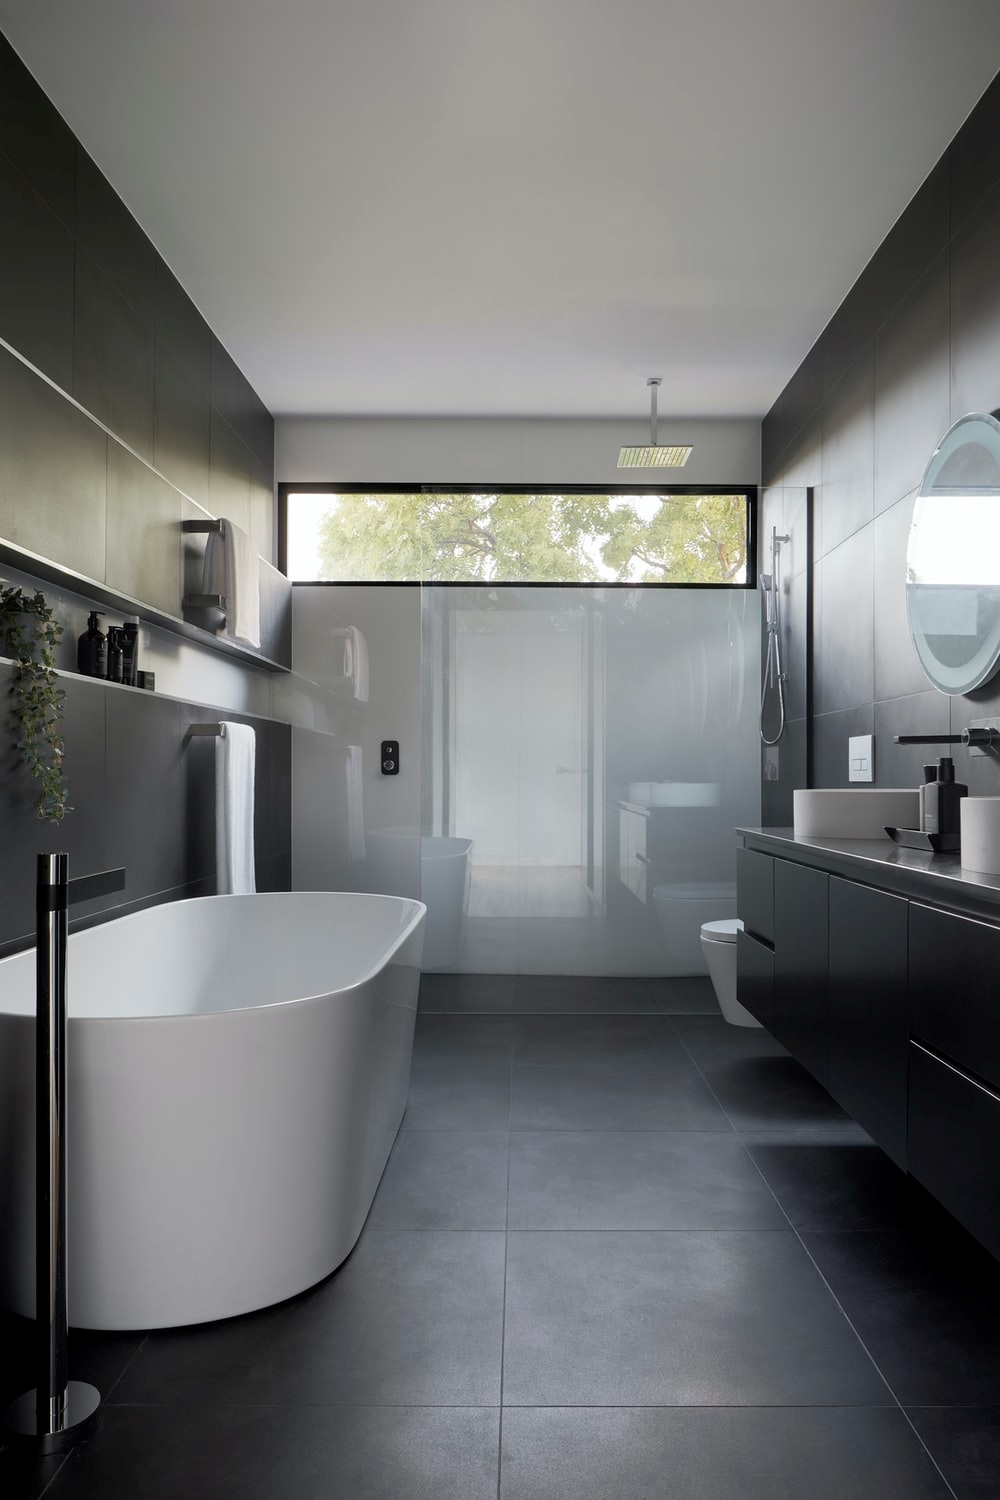 5 Trendy Design Ideas for a Modern Bathroom